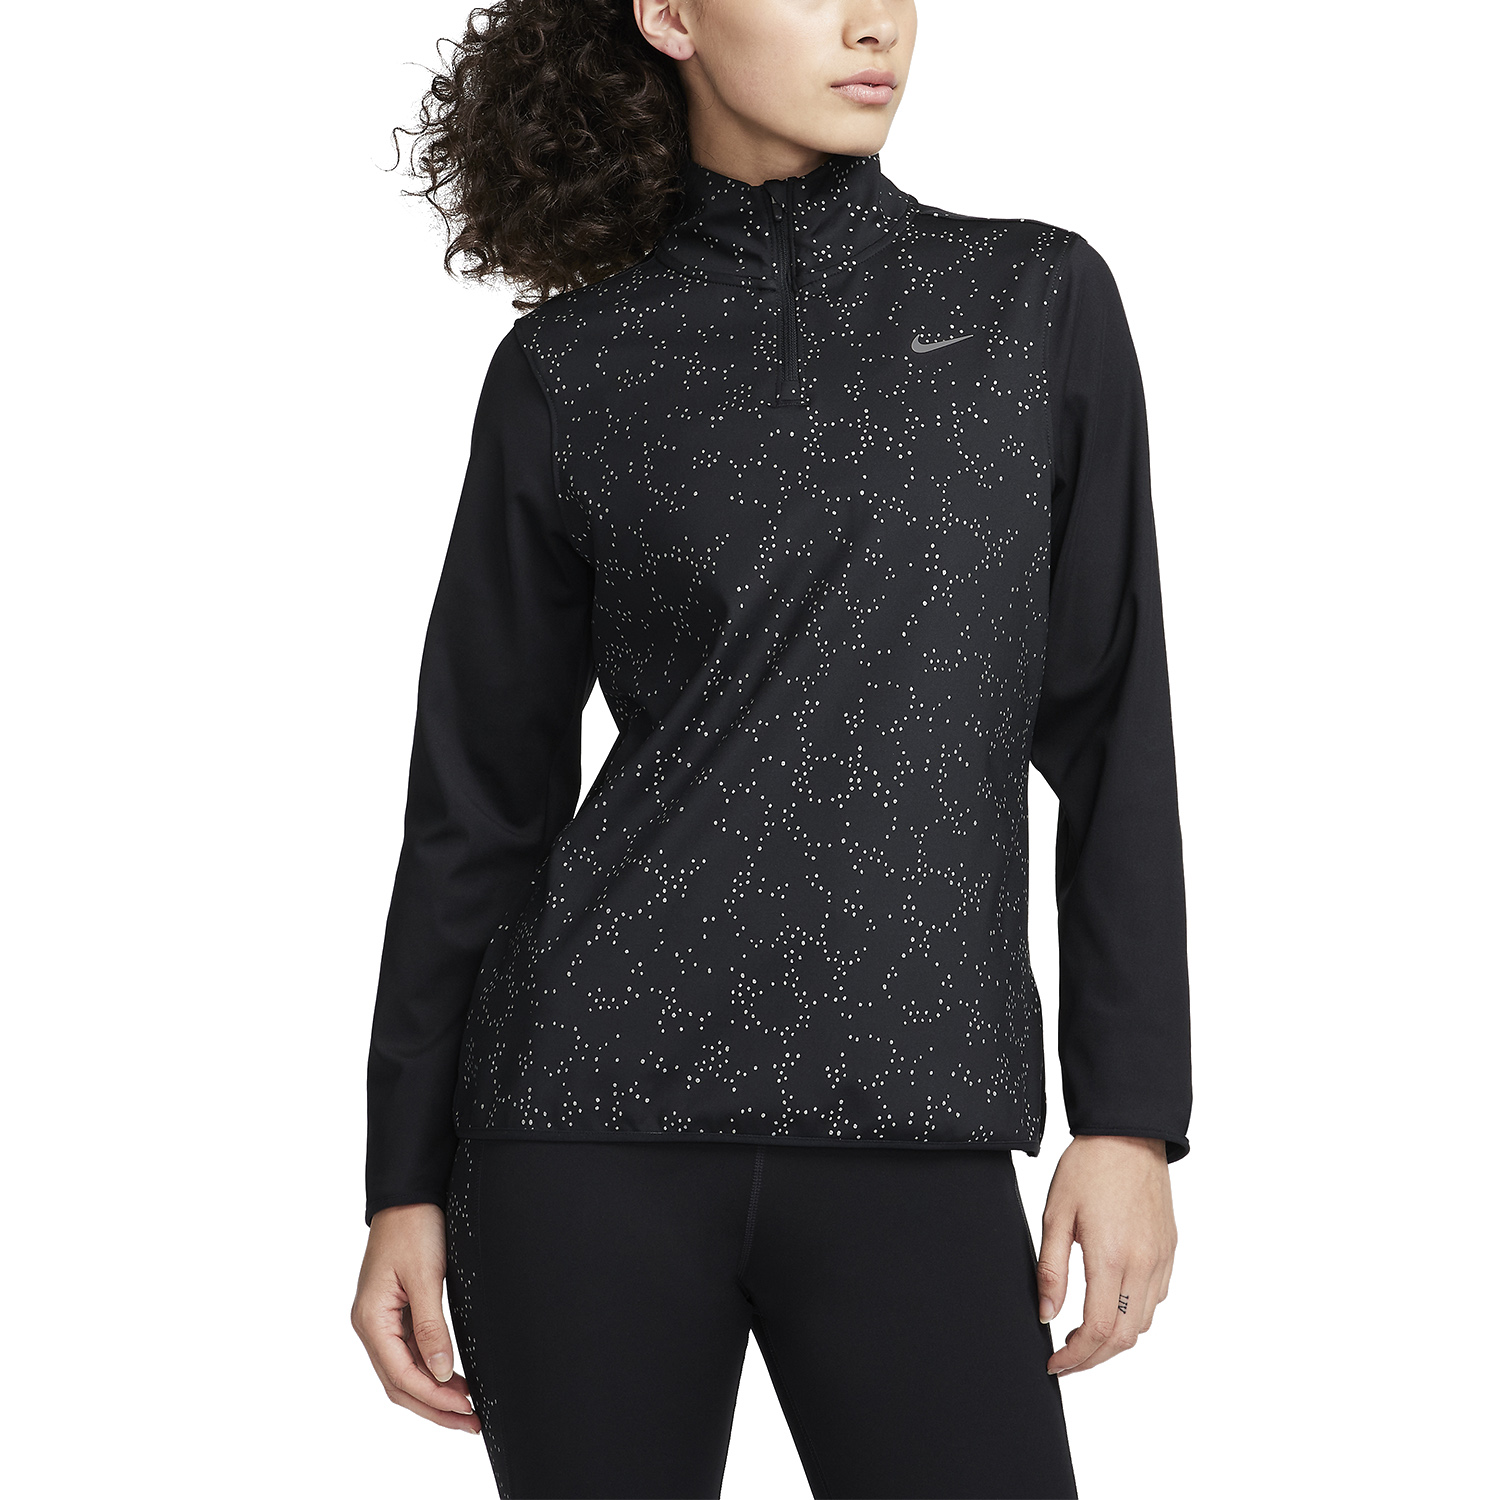 Nike Swift Element Shirt - Black/Reflective Silver